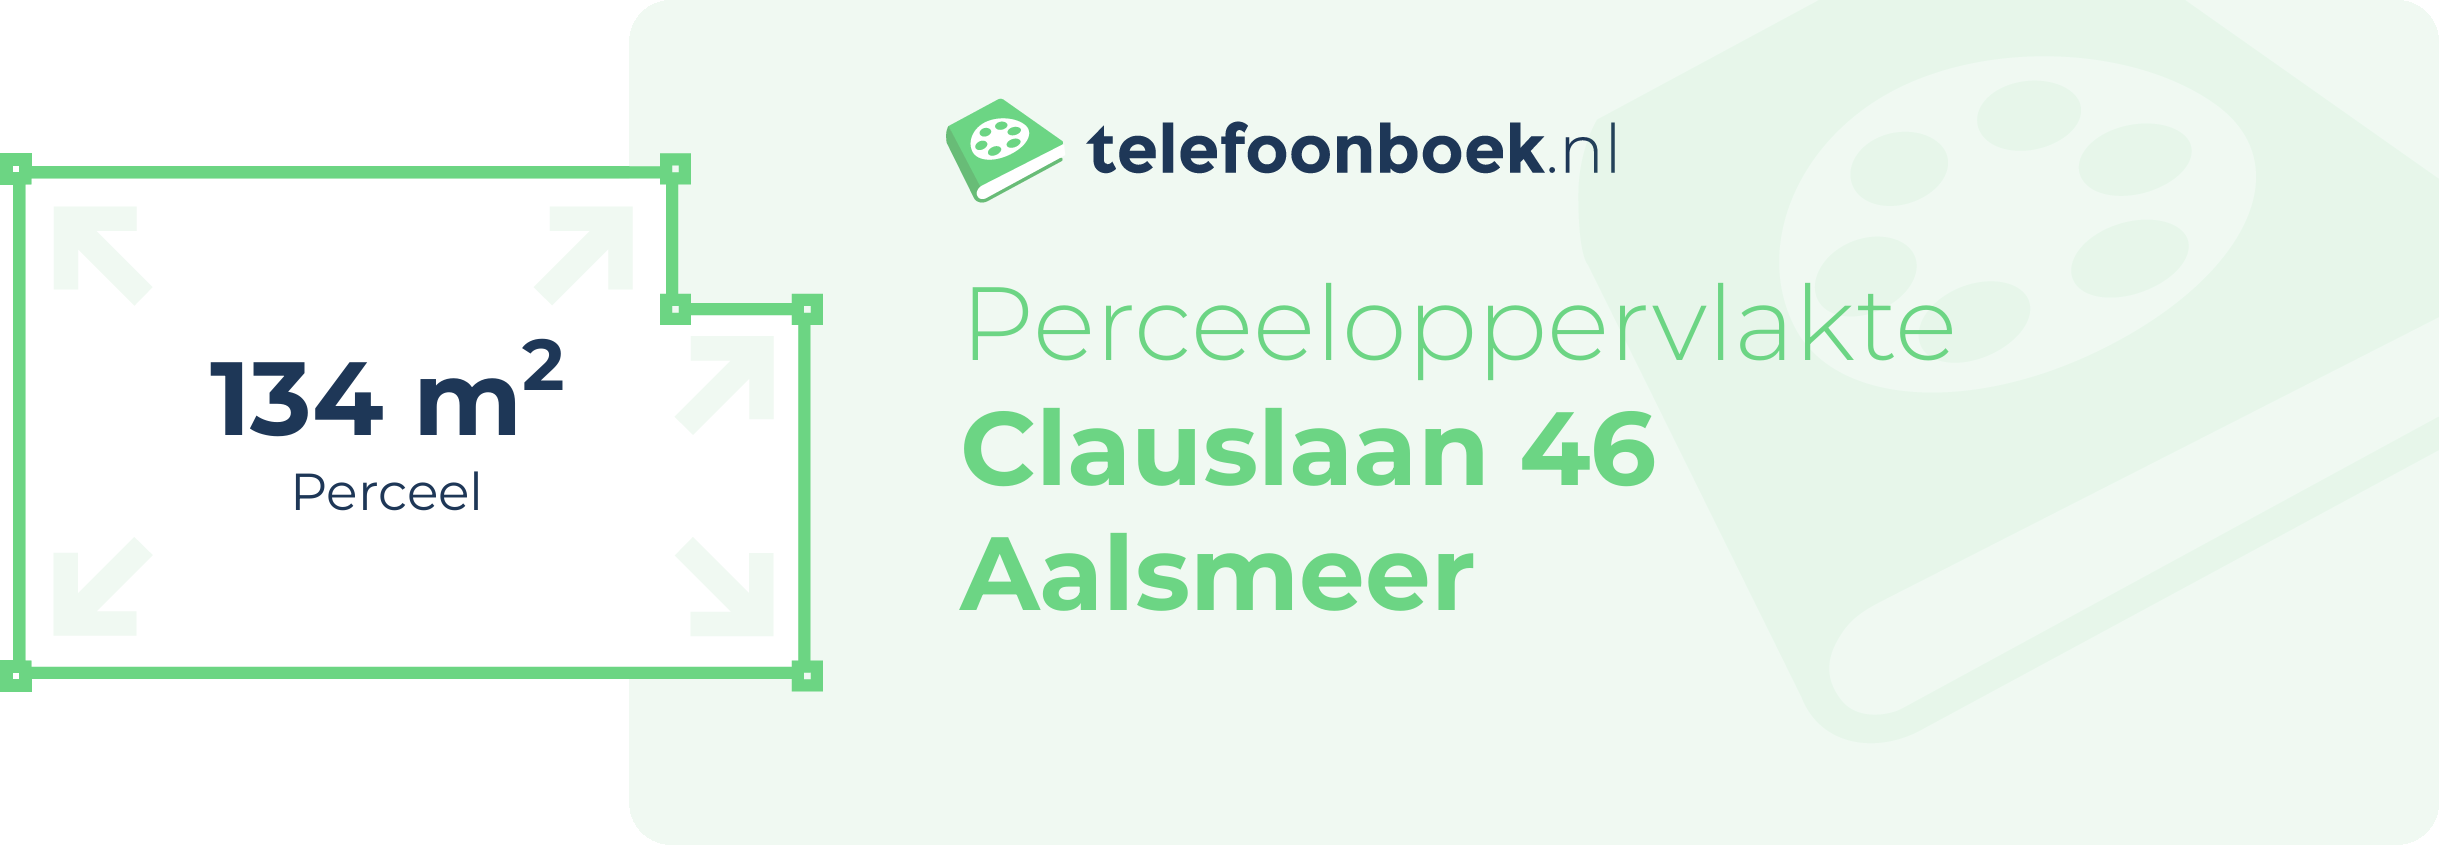 Perceeloppervlakte Clauslaan 46 Aalsmeer